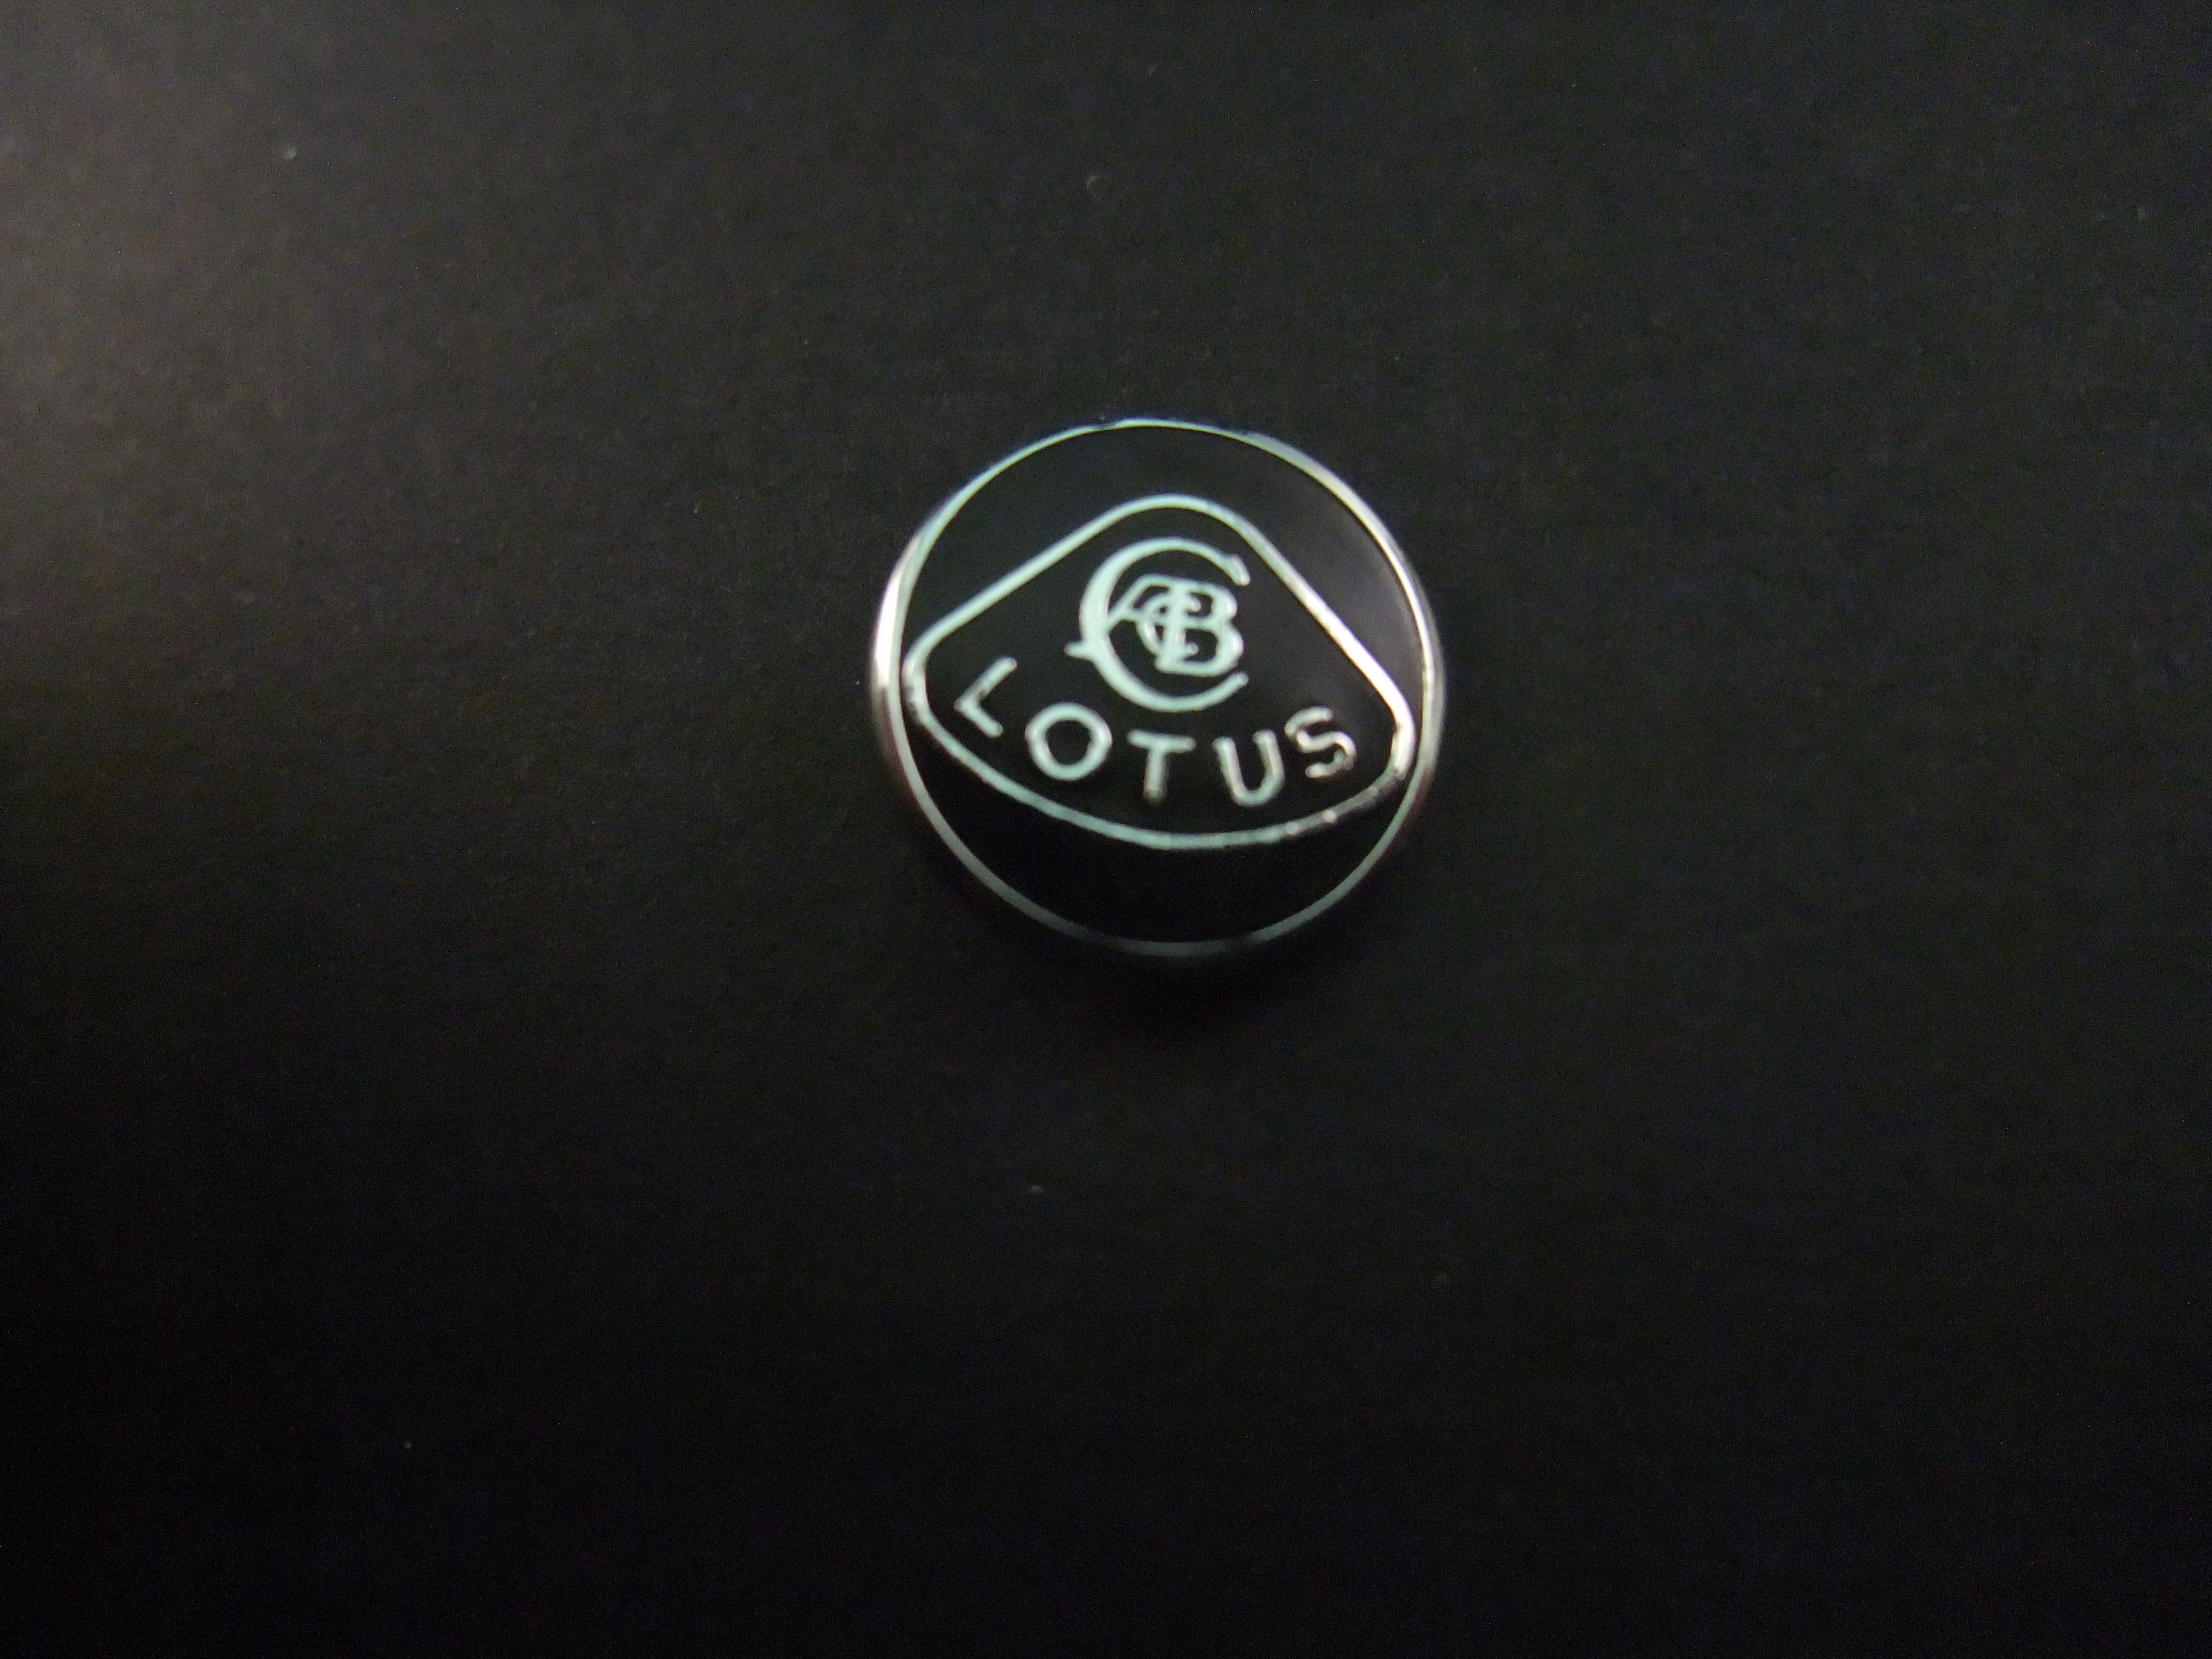 Lotus Britse sportwagenfabrikant , logo zwart